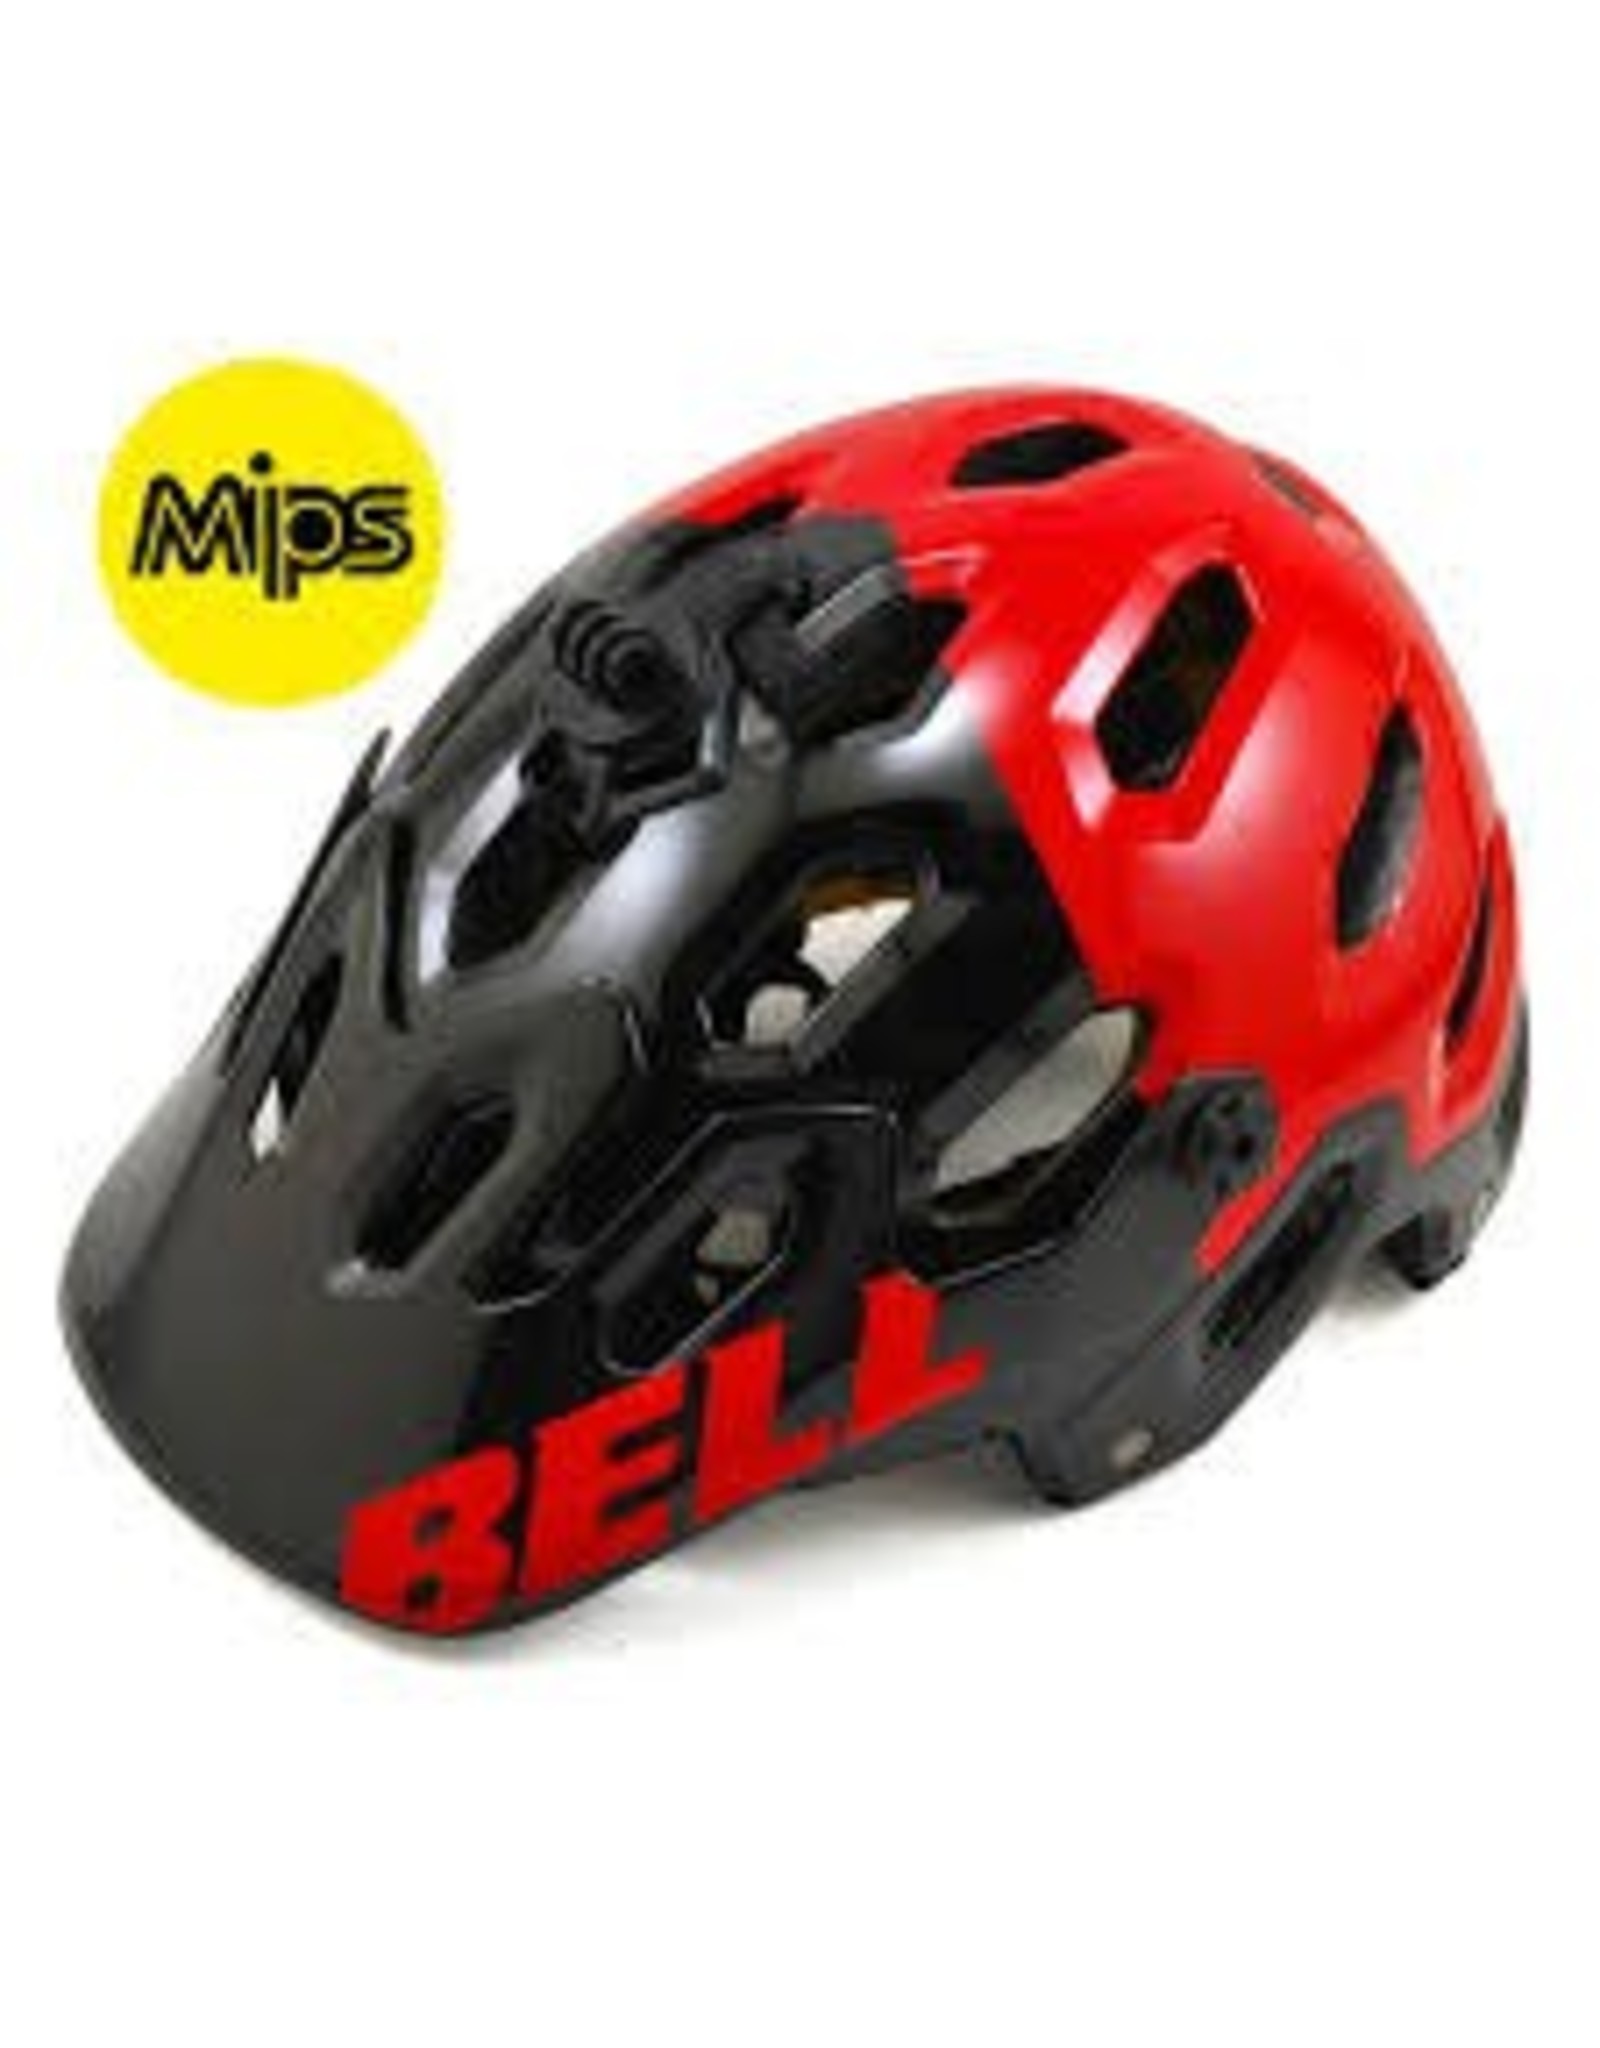 best downhill mtb helmet